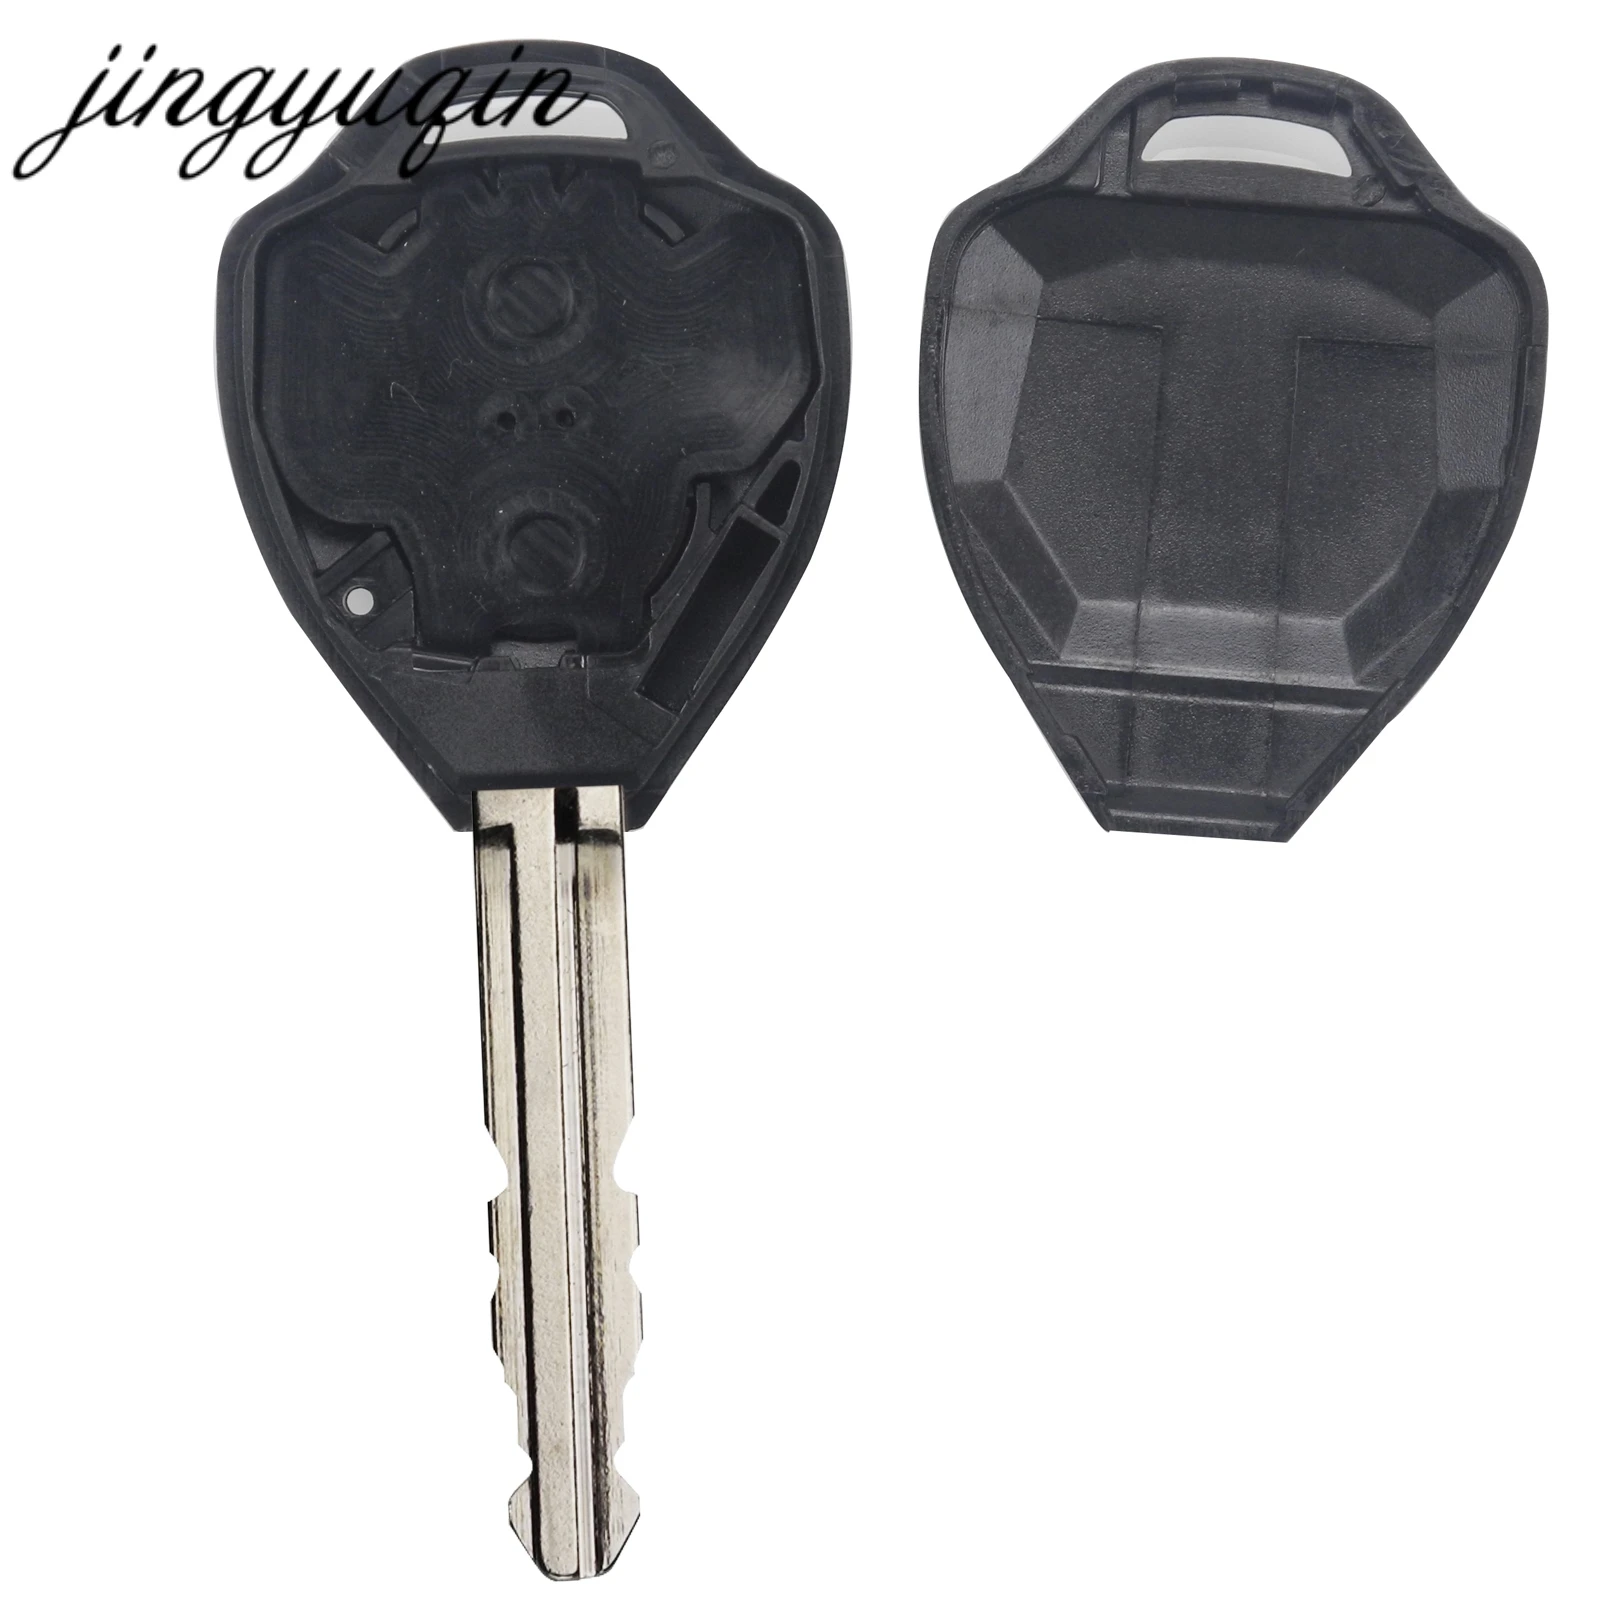 Jingyuqin Cut Blade Apima 2 3 4 Mygtukai Automobilio Nuotolinio klavišą 